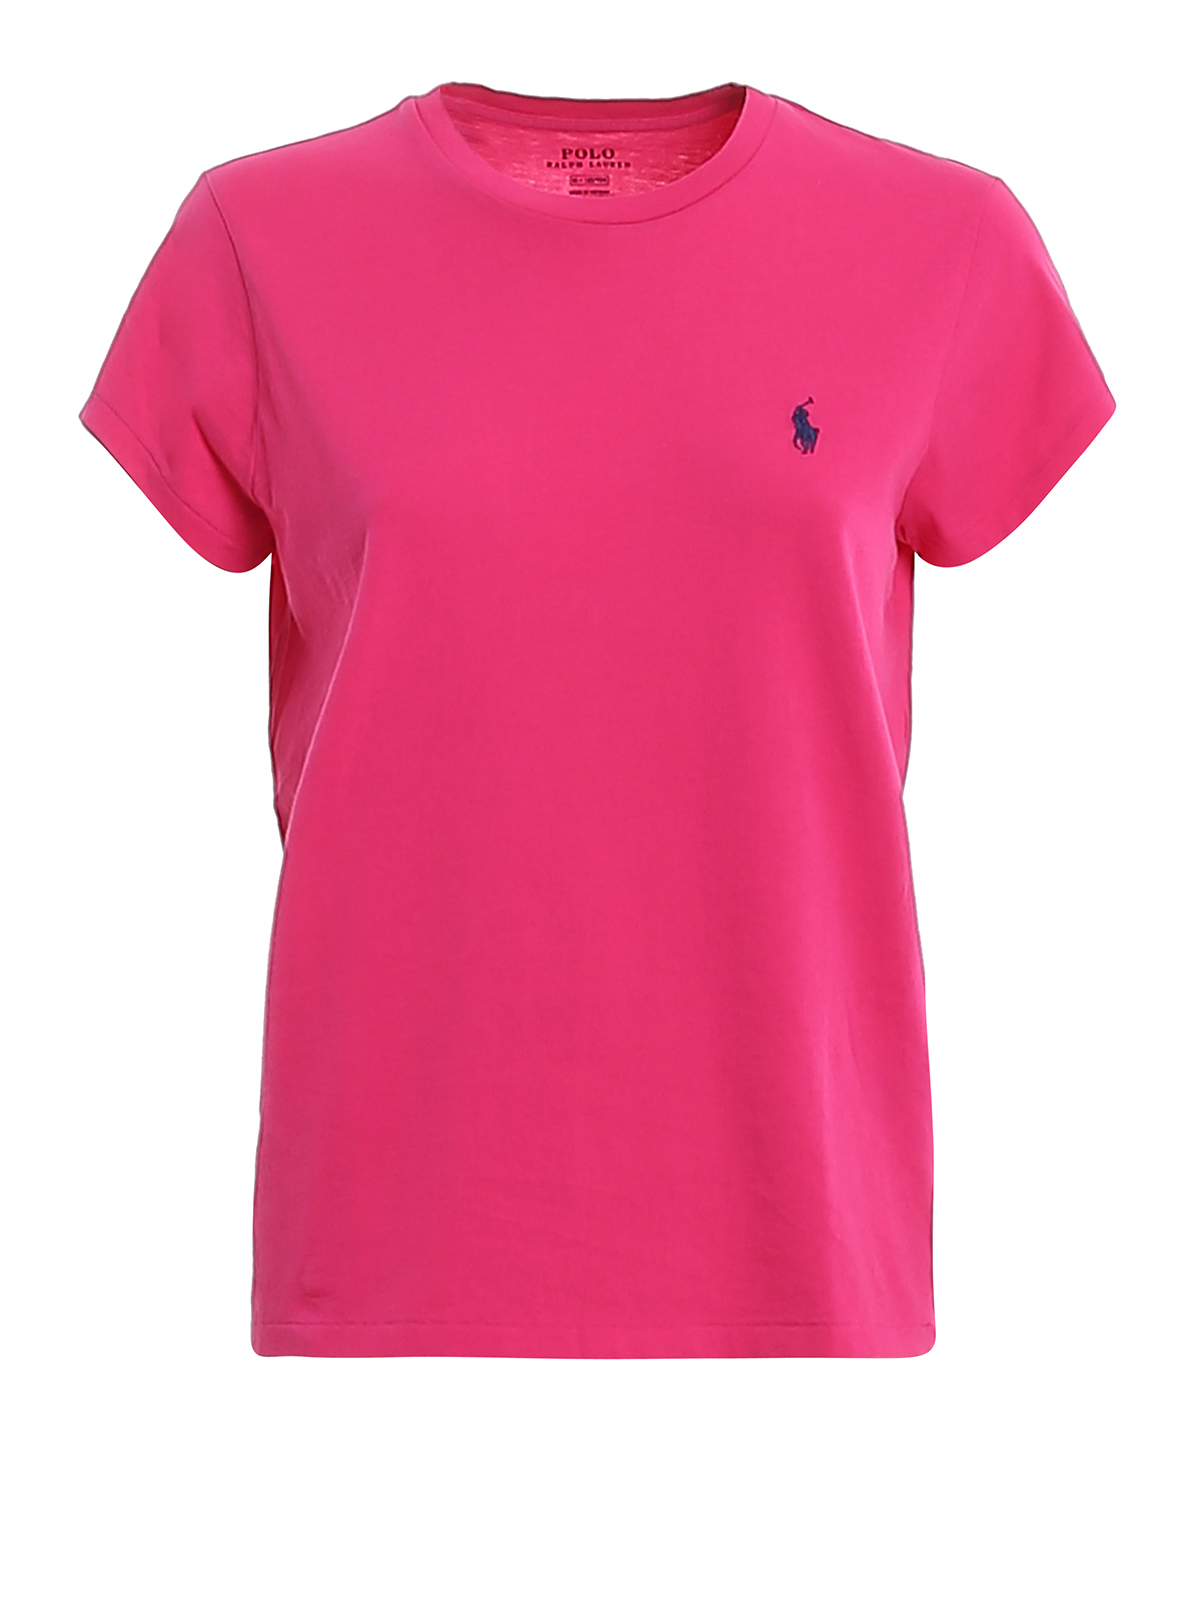 Tシャツ Polo Ralph Lauren - Tシャツ - フクシア - 211734144022